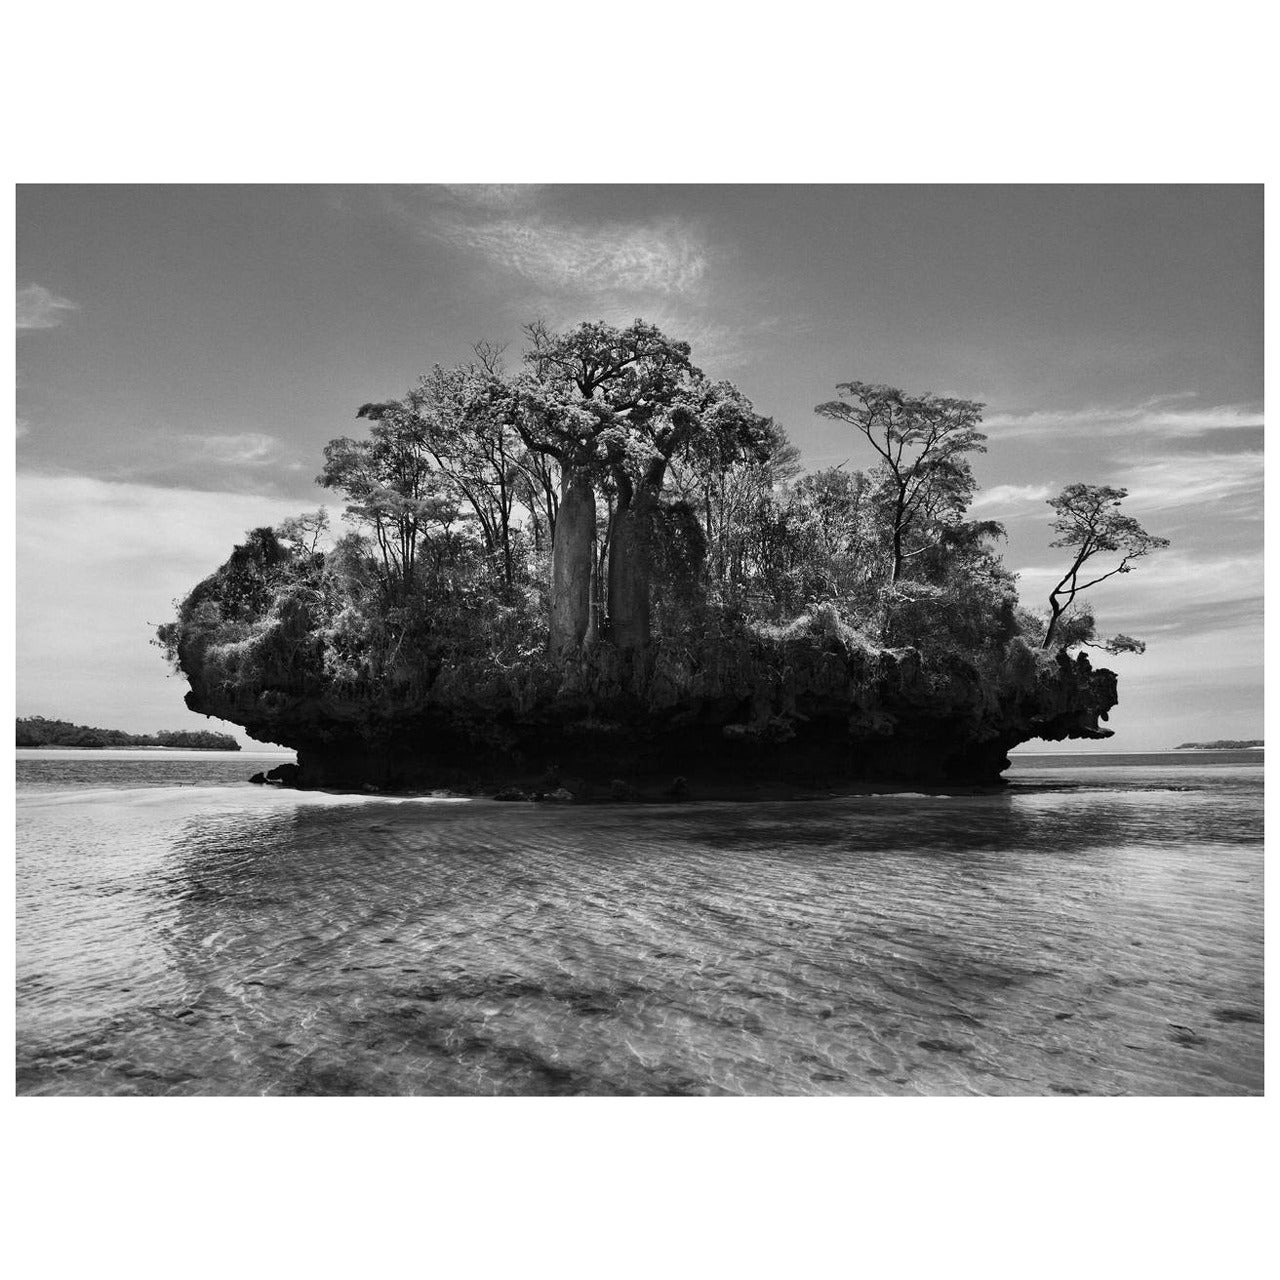 Sebastião Salgado, Baobab Trees on a Mushroom Island Photograph